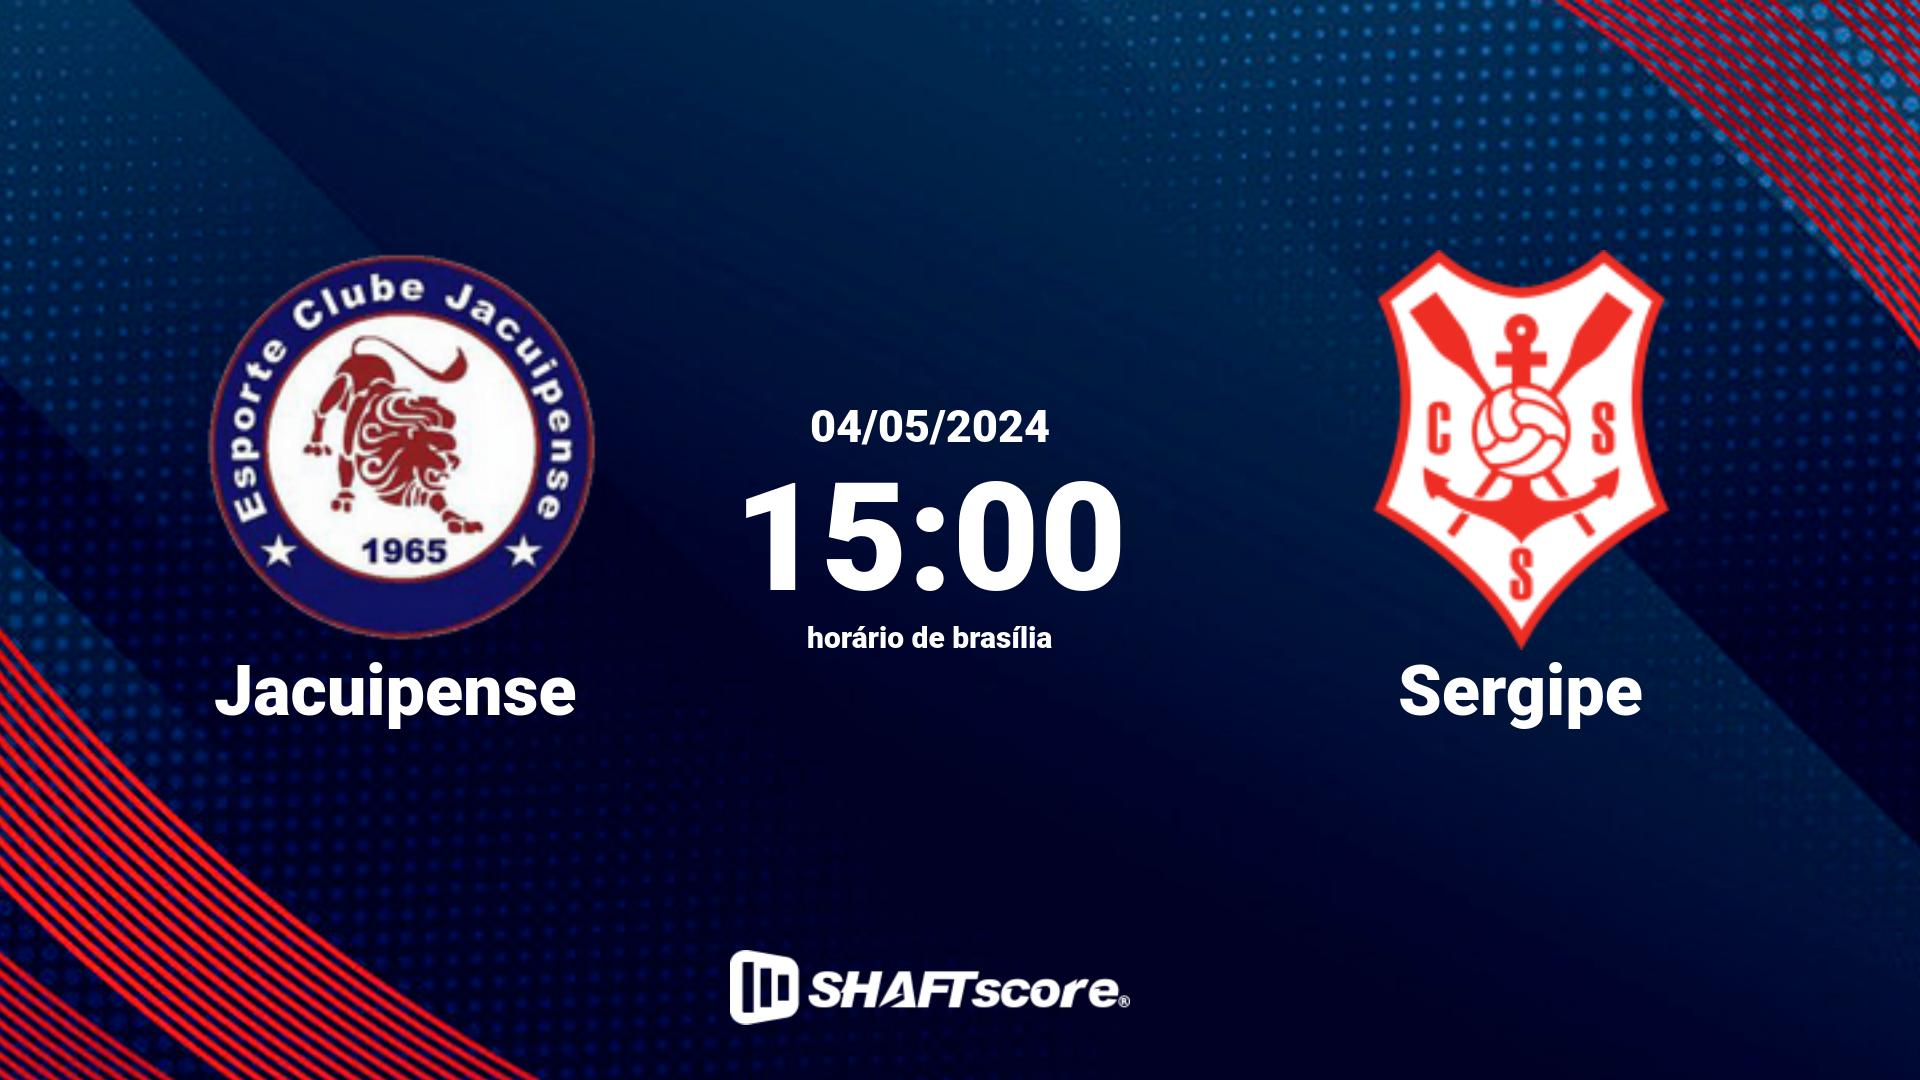 Estatísticas do jogo Jacuipense vs Sergipe 04.05 15:00